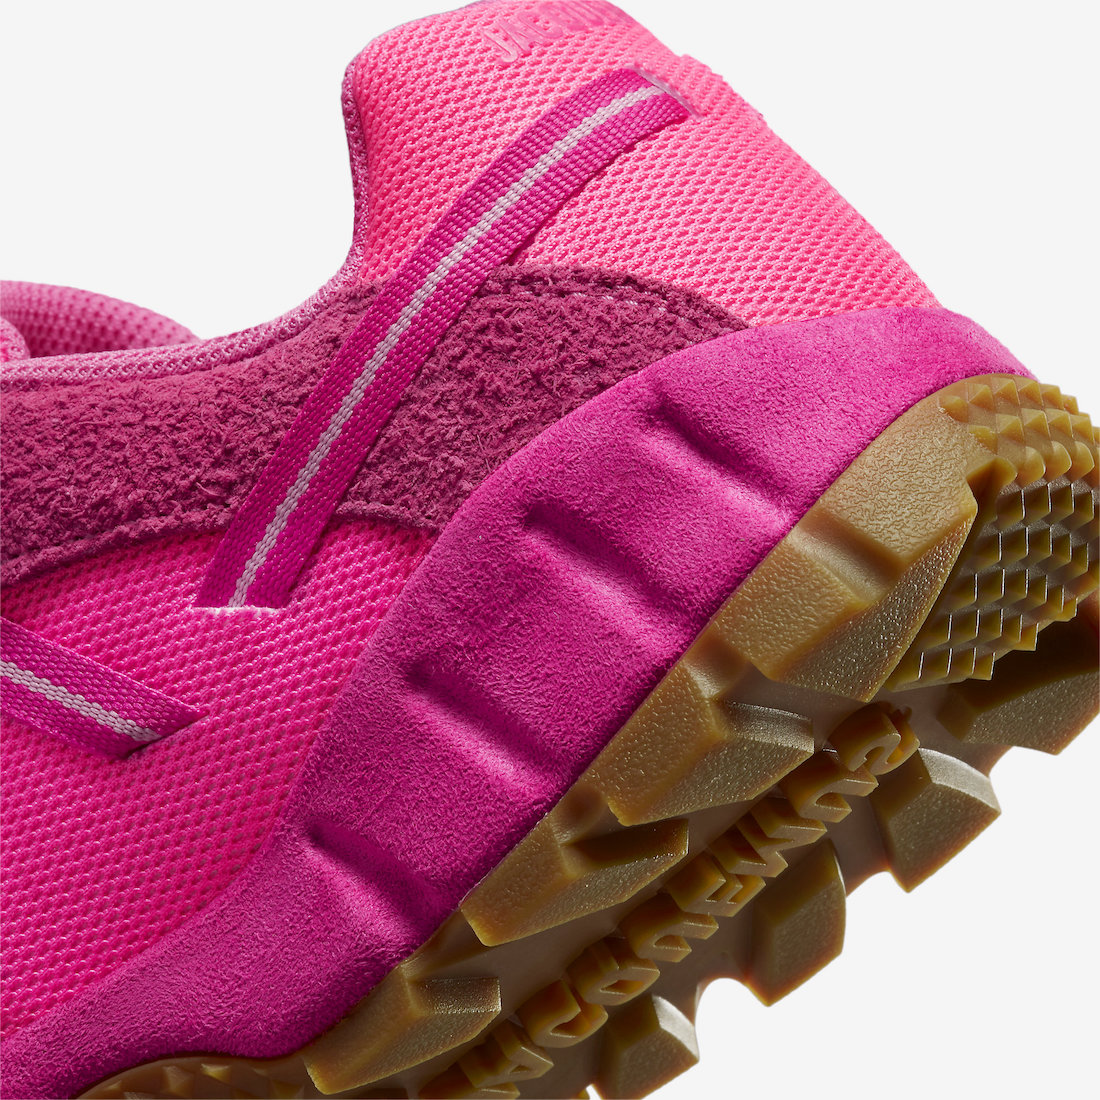 Jacquemus Nike Air Humara Pink DX9999 600 Release Date 7